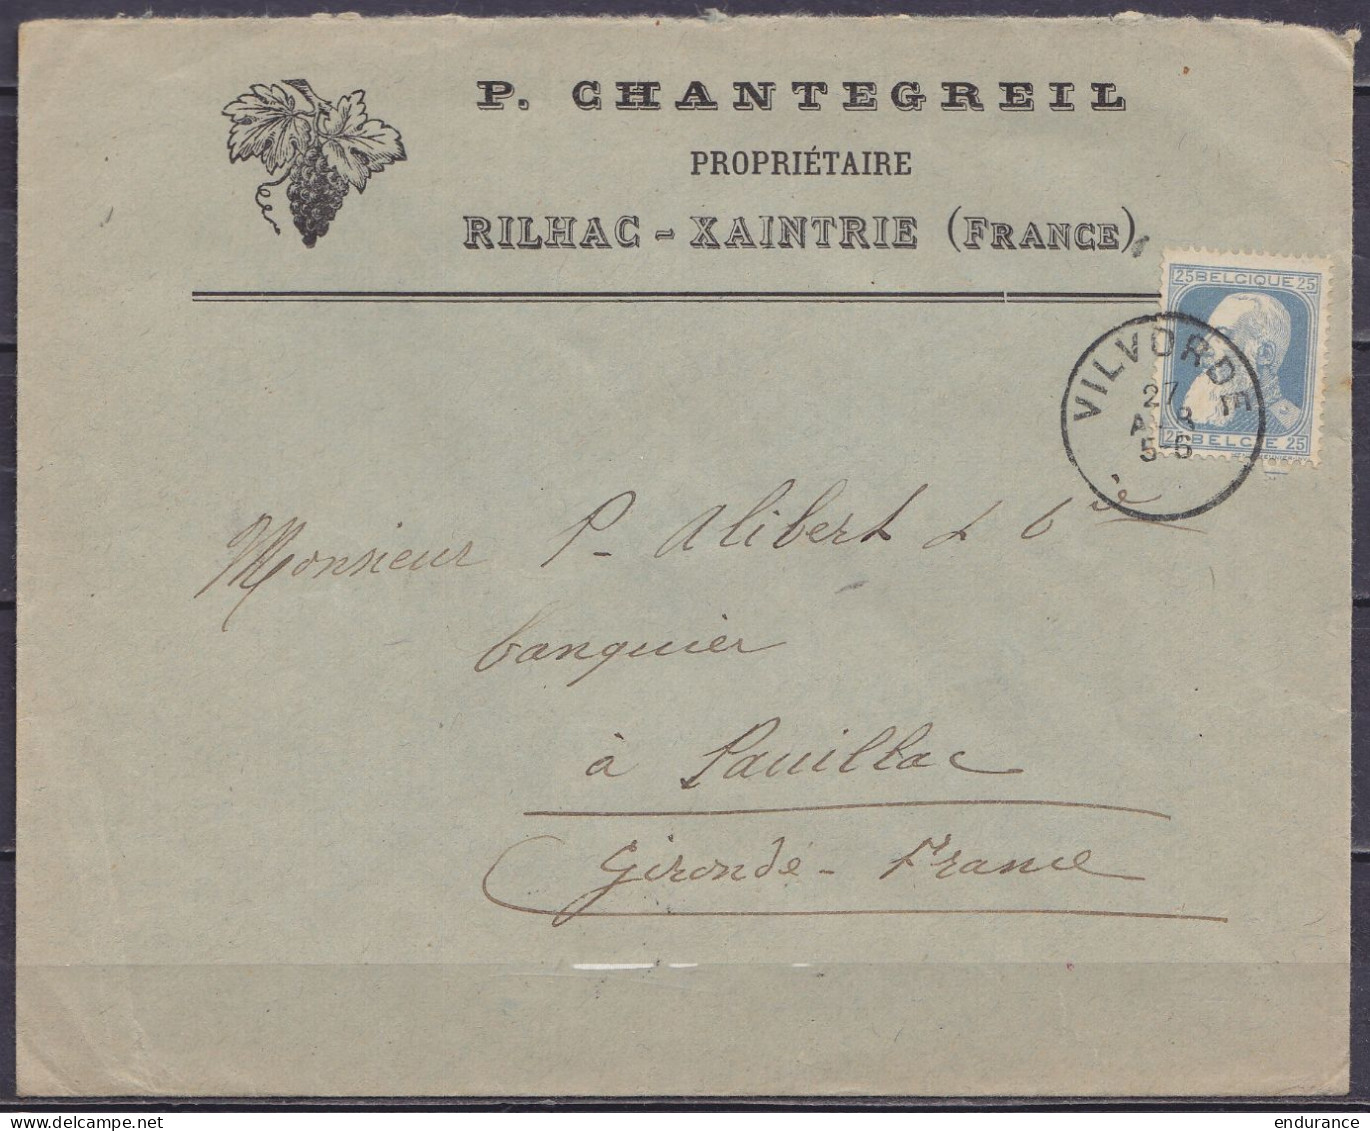 L. Entête Viticulteur "Chantegreil Rilhac-Xaintrie" Affr. N°76 Càd VILVOORDE /27 AVR 1908 Pour PAUILLAC Gironde (thème V - 1905 Grosse Barbe